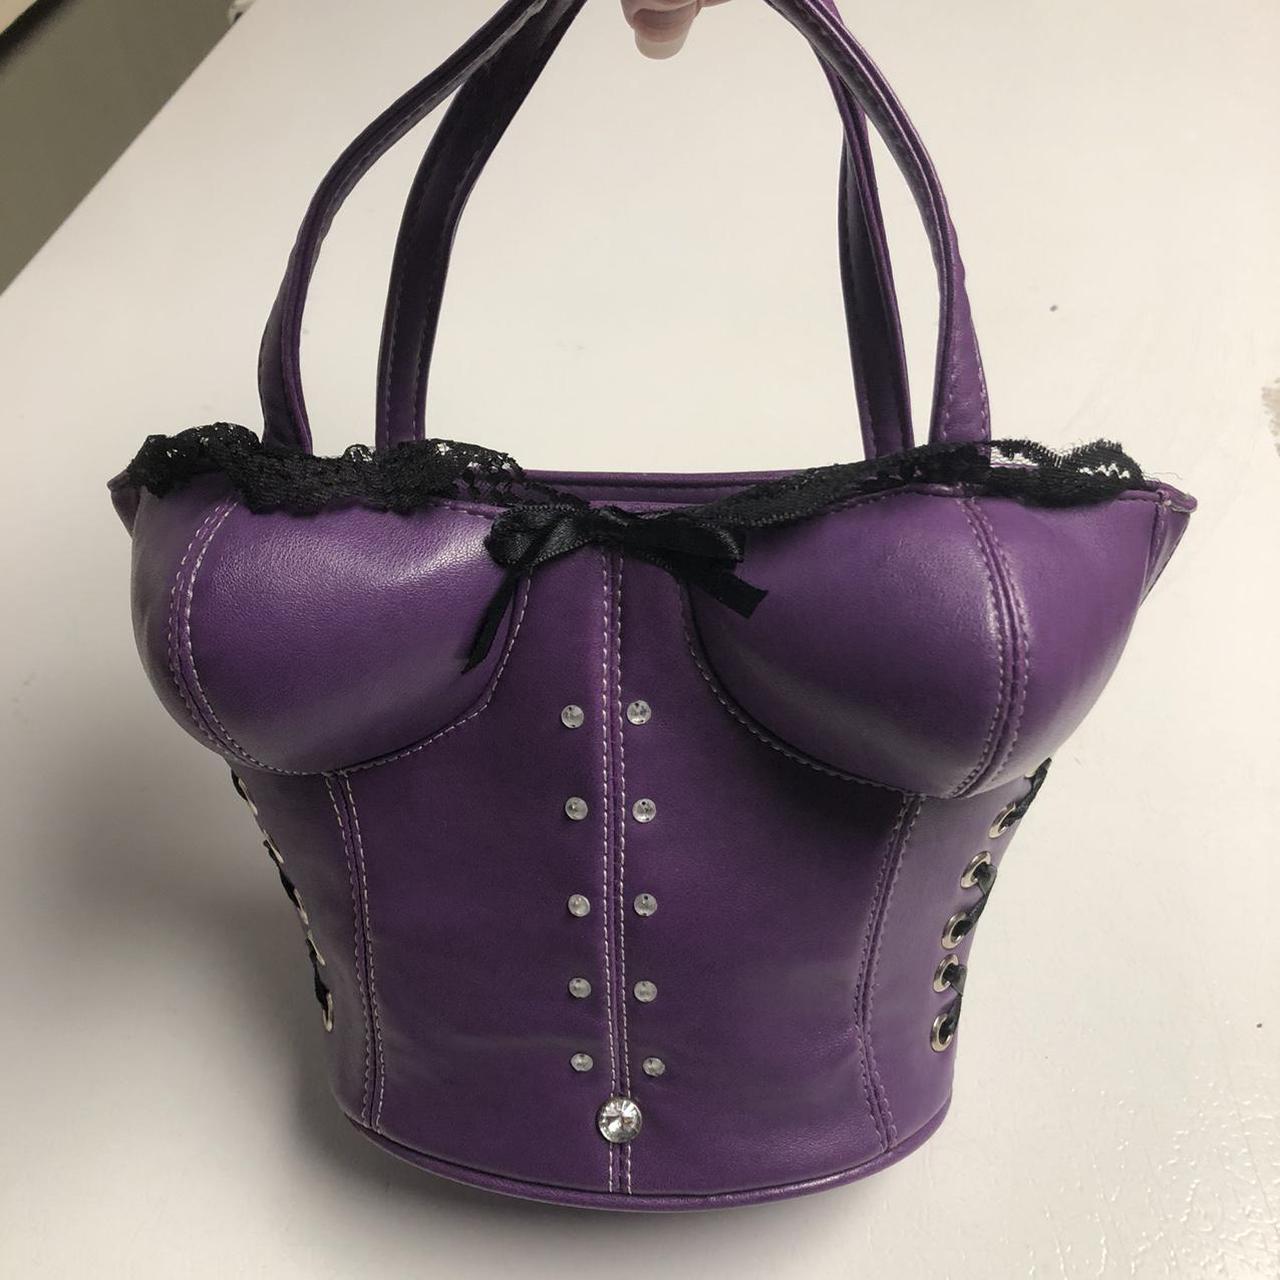 Hot Topic Women's Black and Purple Bag